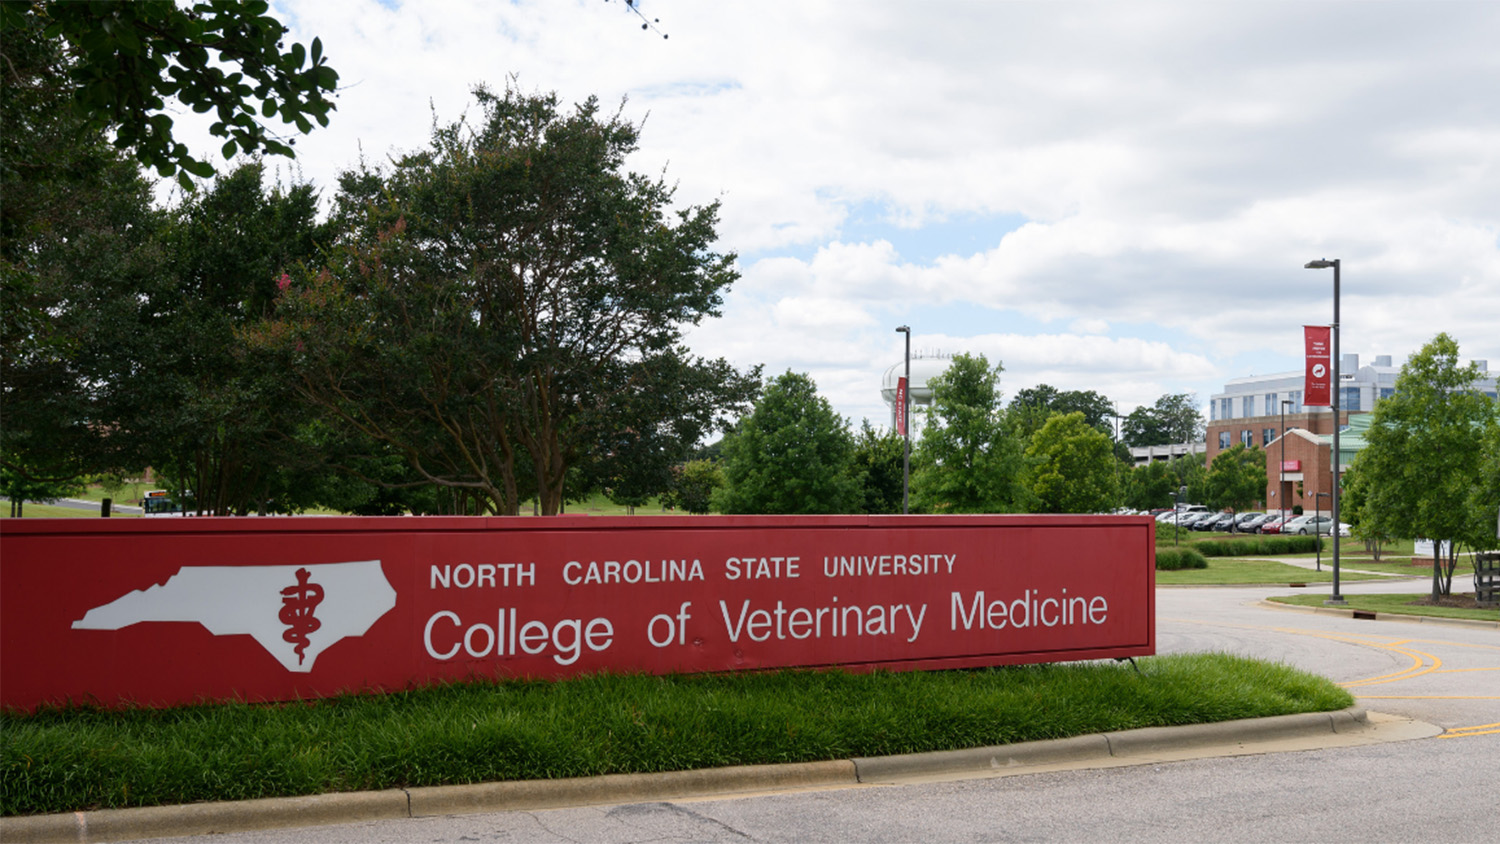 College of Veterinary Medicine sign